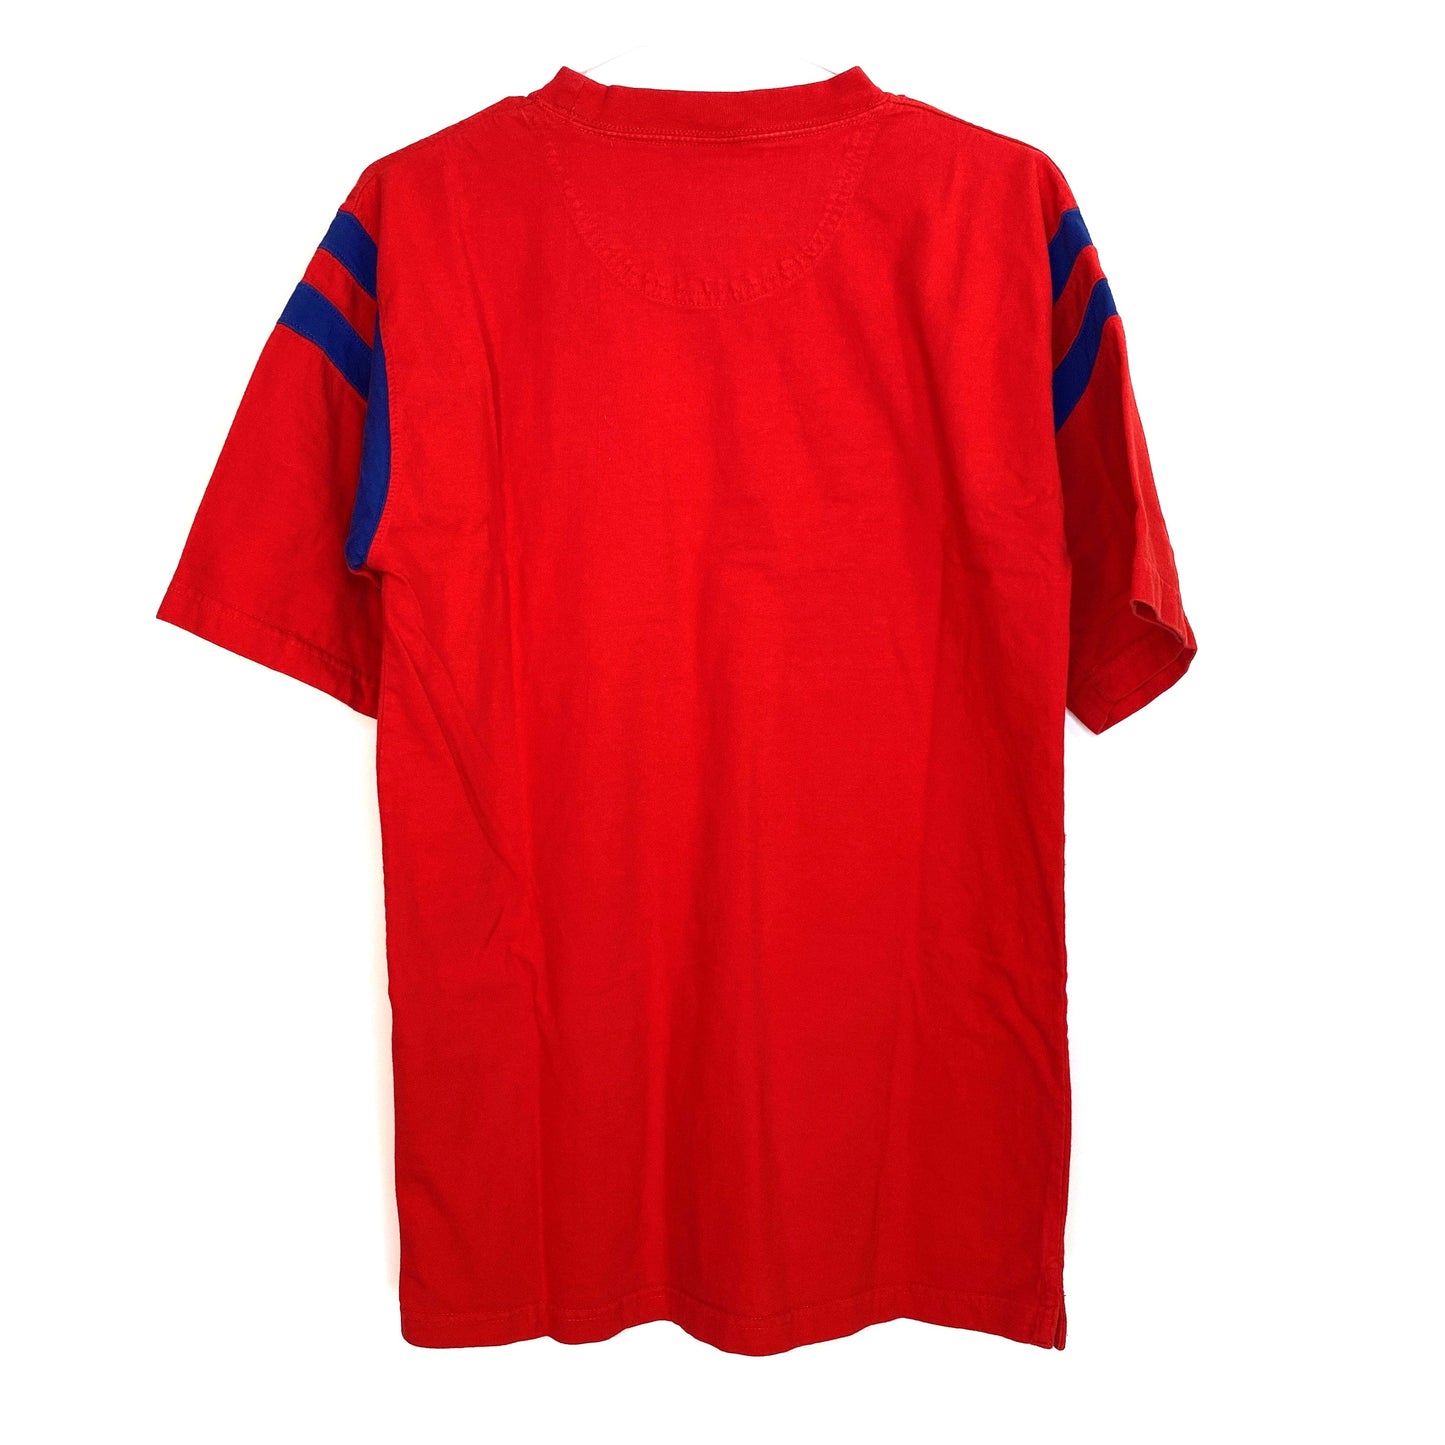 Active Mens Size M Red w/ Blue Kansas KU Jayhawks T-Shirt S/s